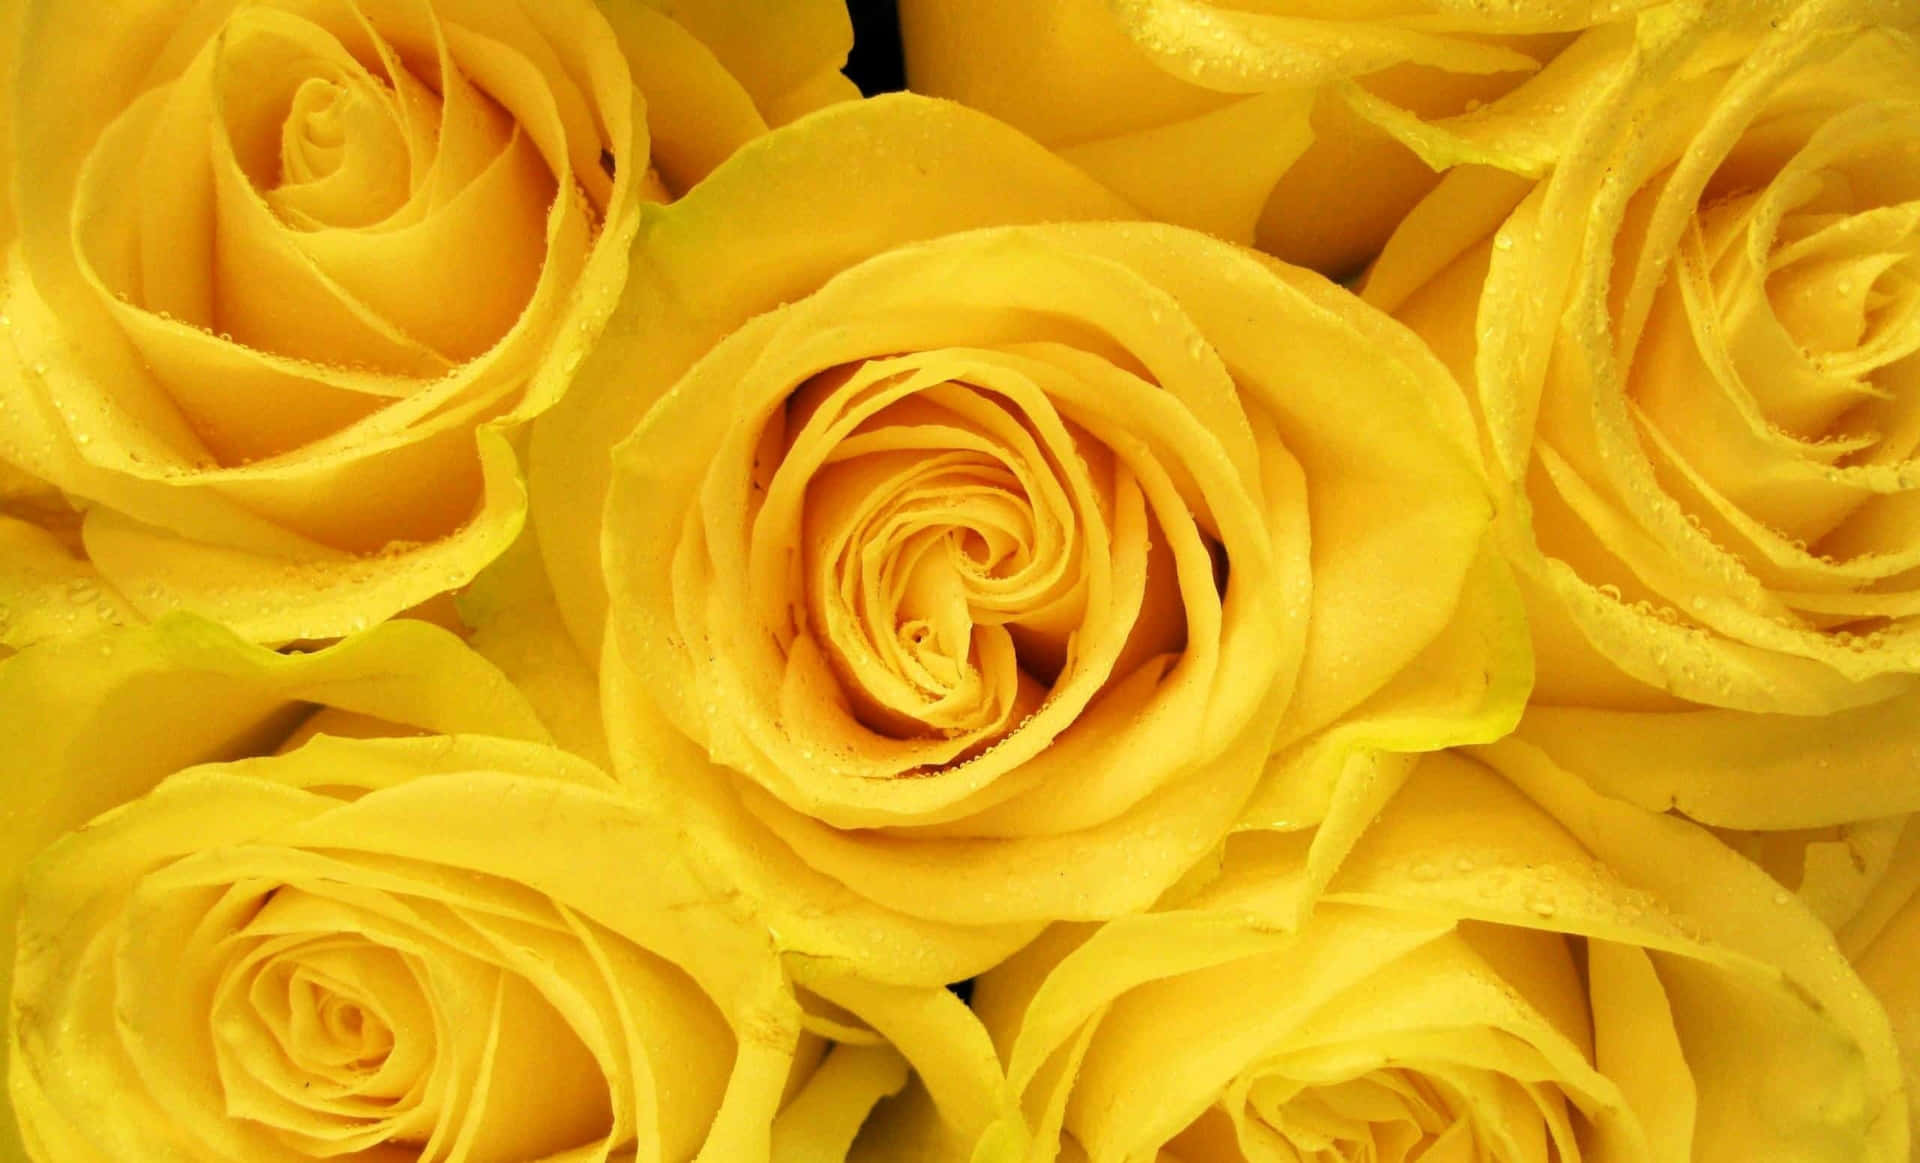 Pretty Roses In Yellow Aesthetic Desktop Wallpaper